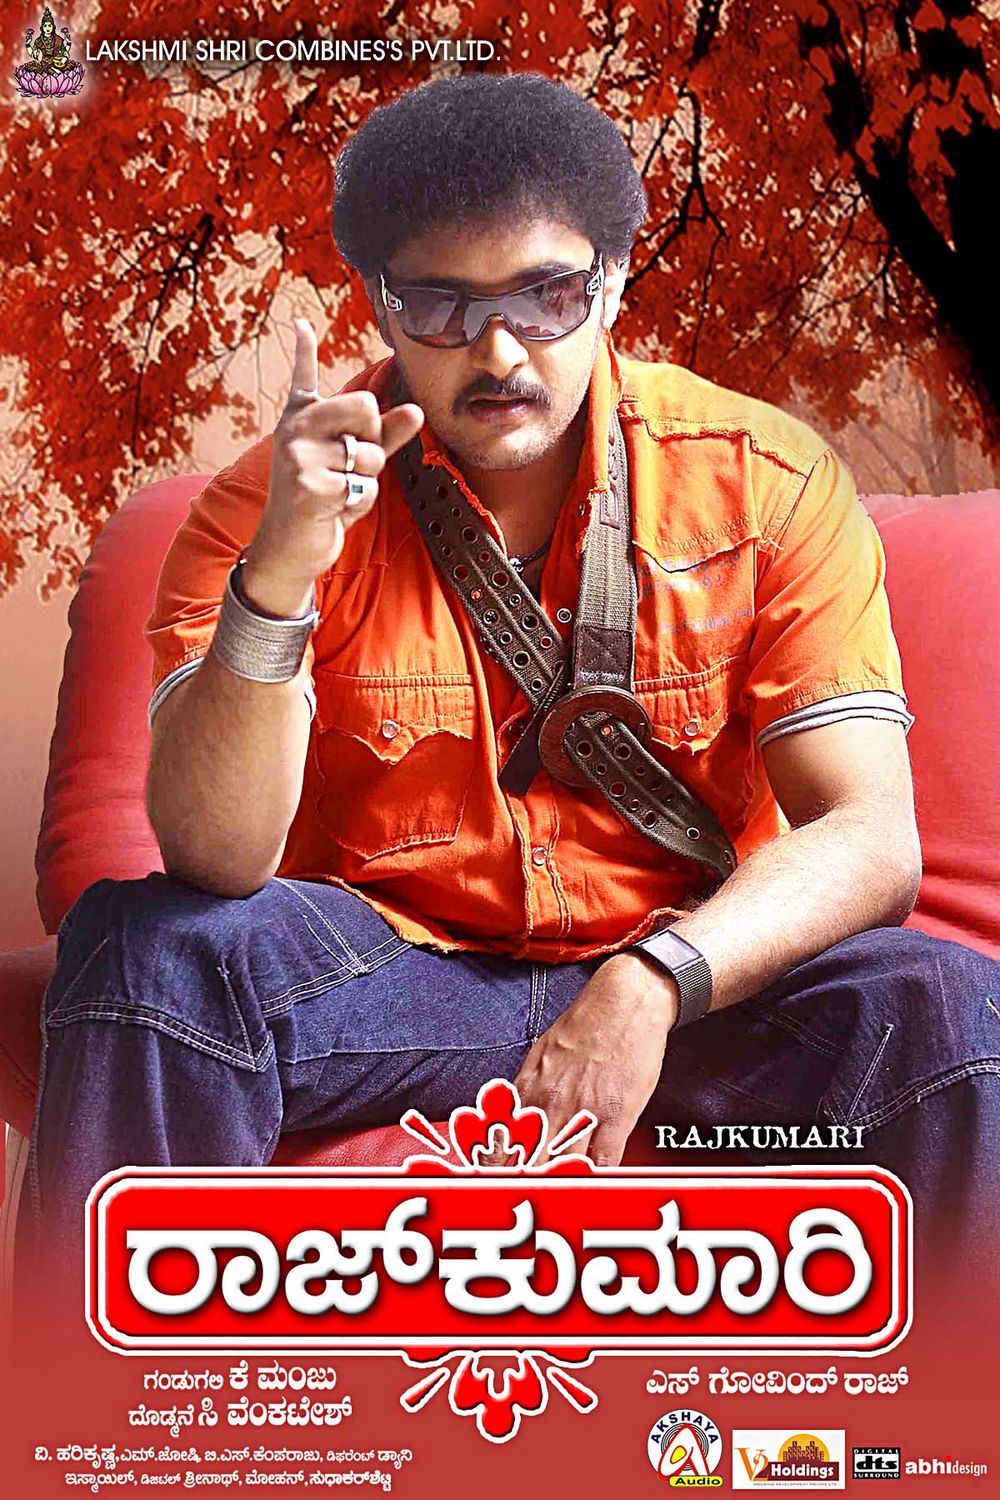 Extra Large Movie Poster Image for Rajkumari (#8 of 20)